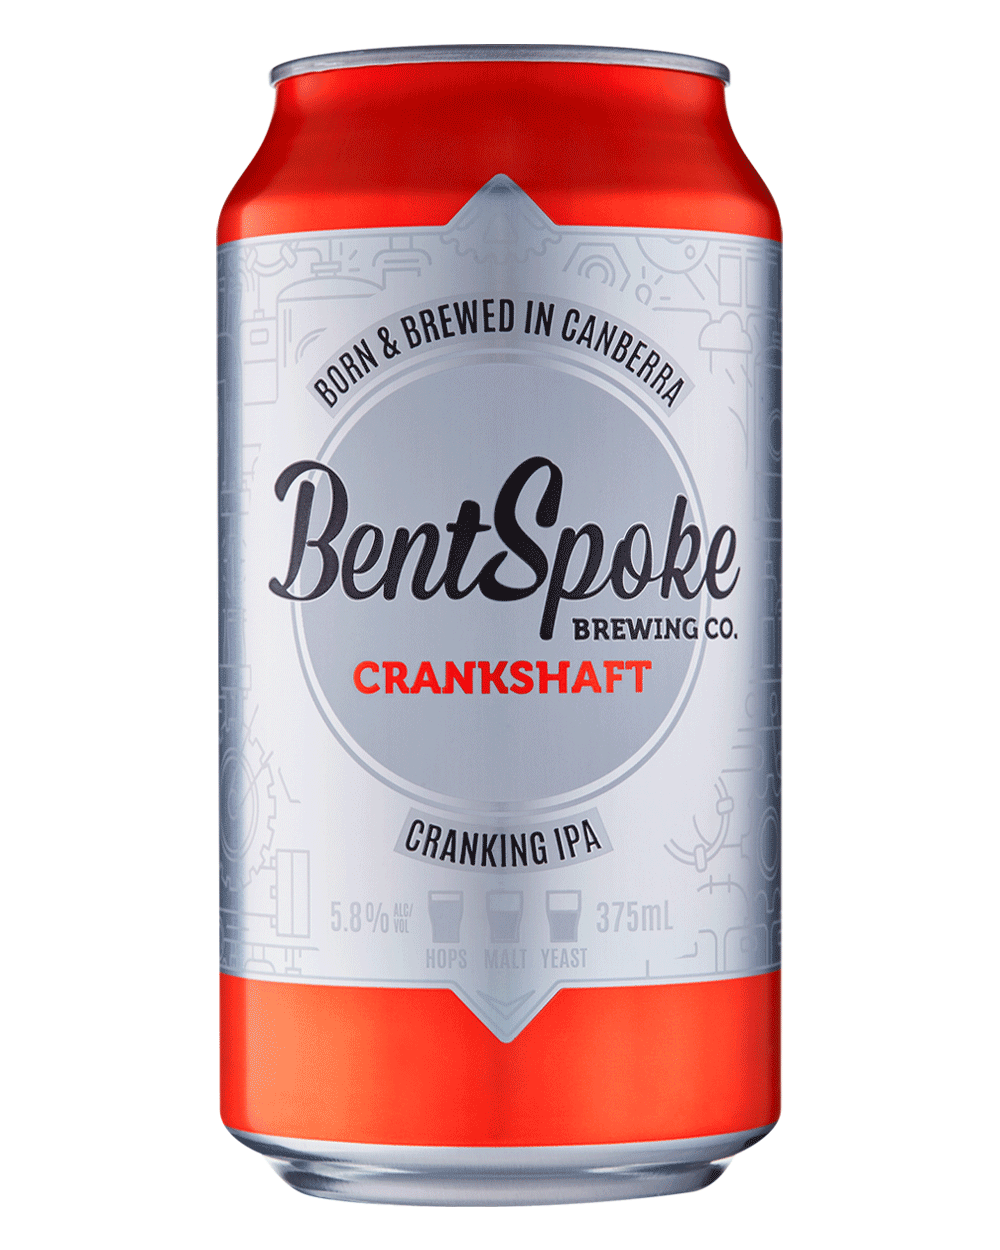 Bentspoke-Crankshaft-Can